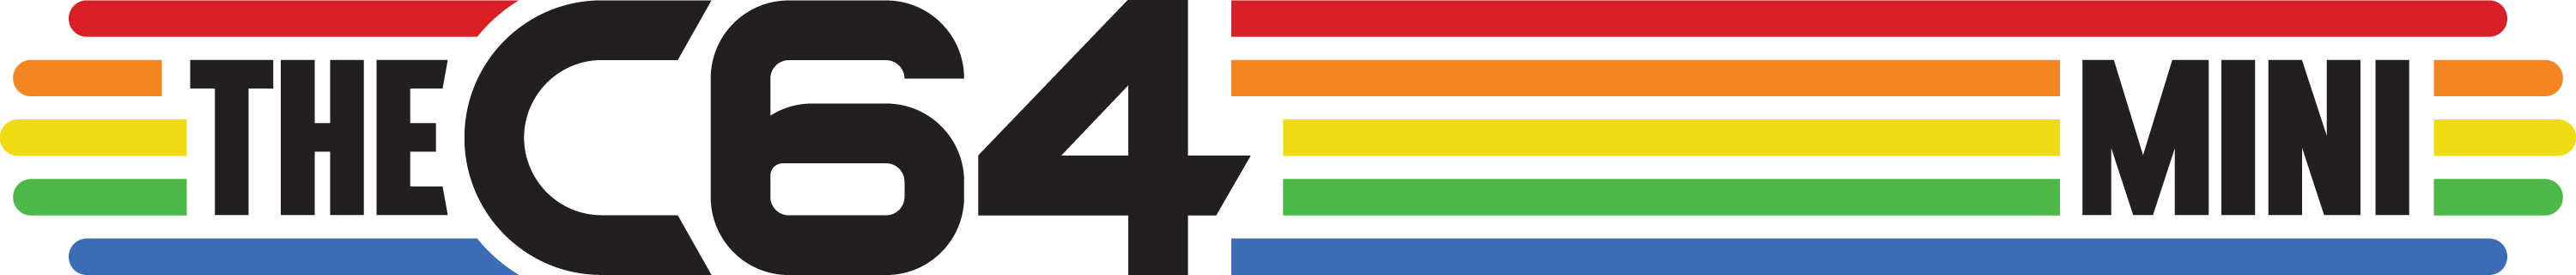 The C64 logo (Retro Gmes/Solutions 2 GO)